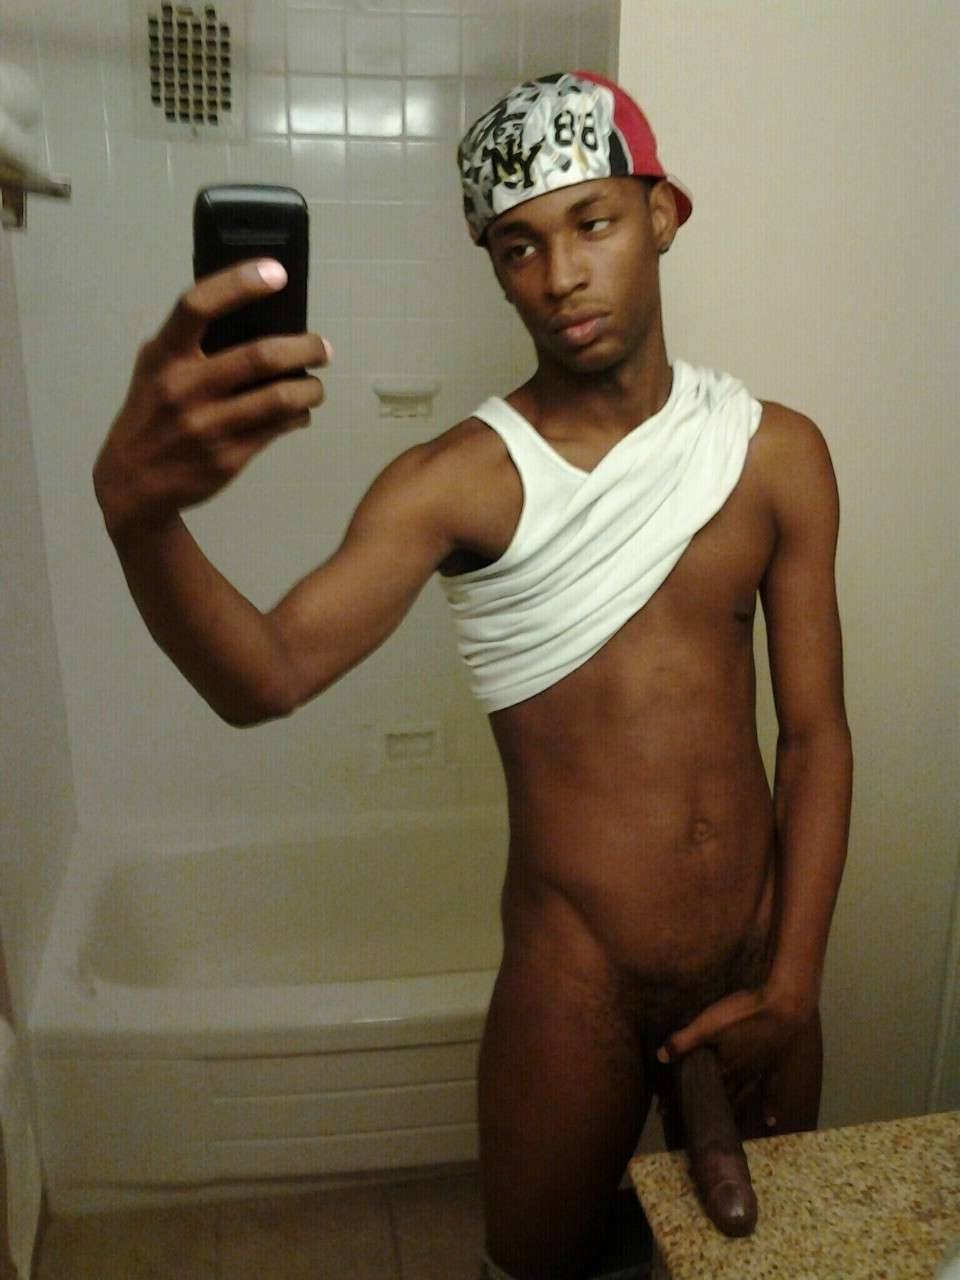 Amateur nude black guy